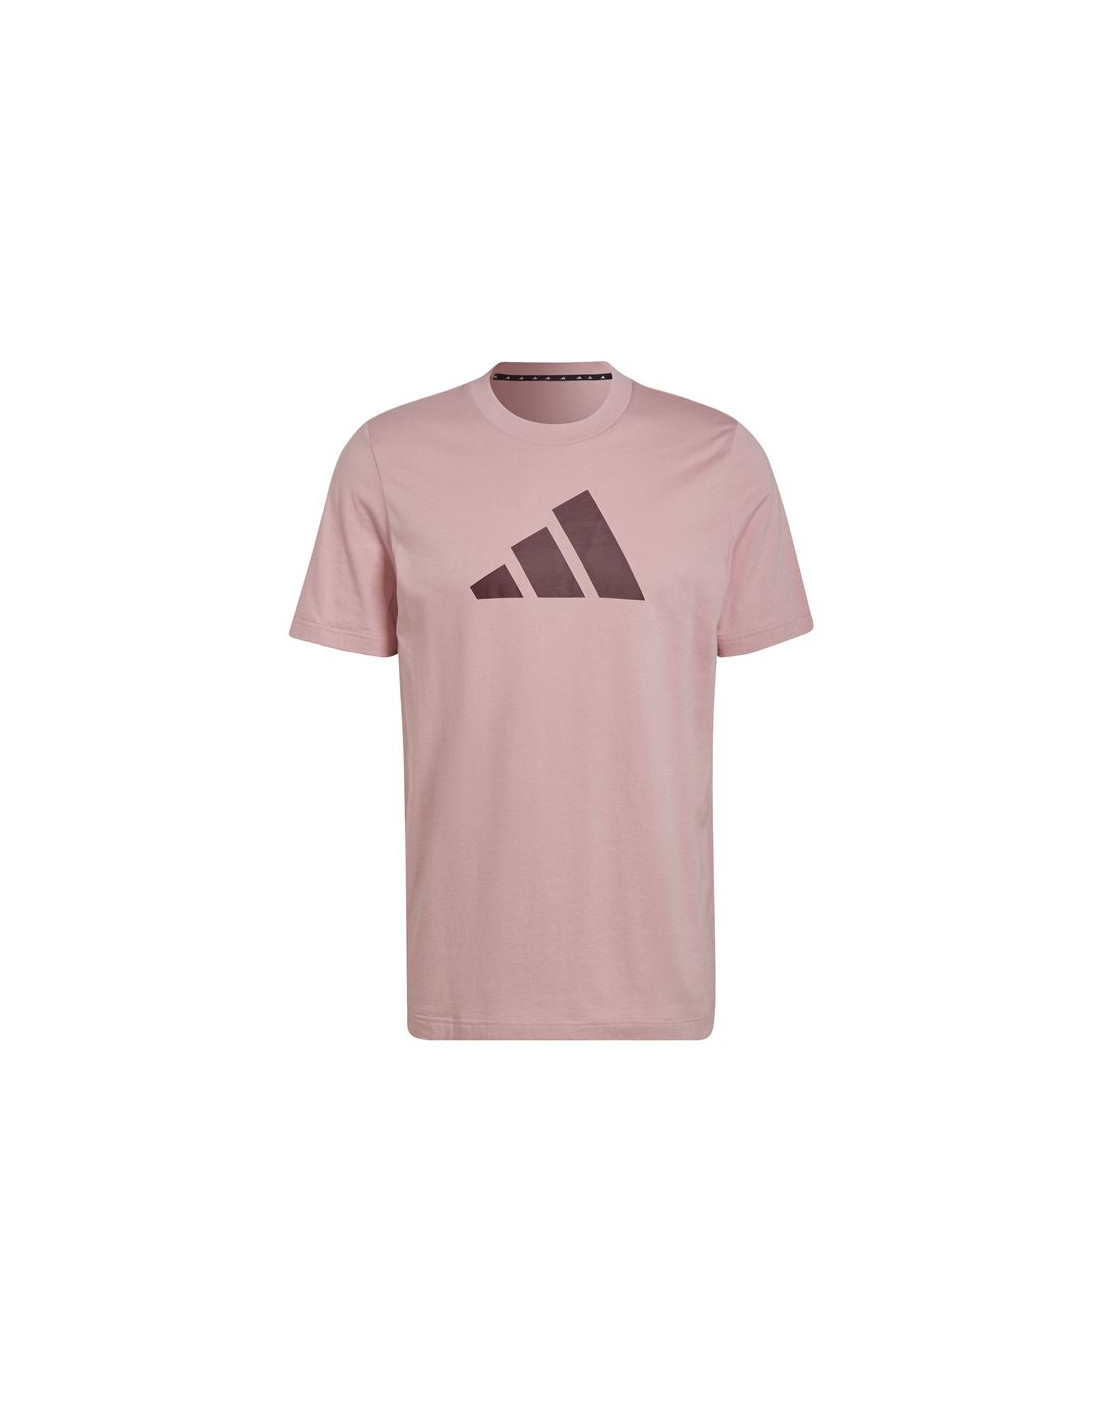 Camiseta adidas future icons m pink